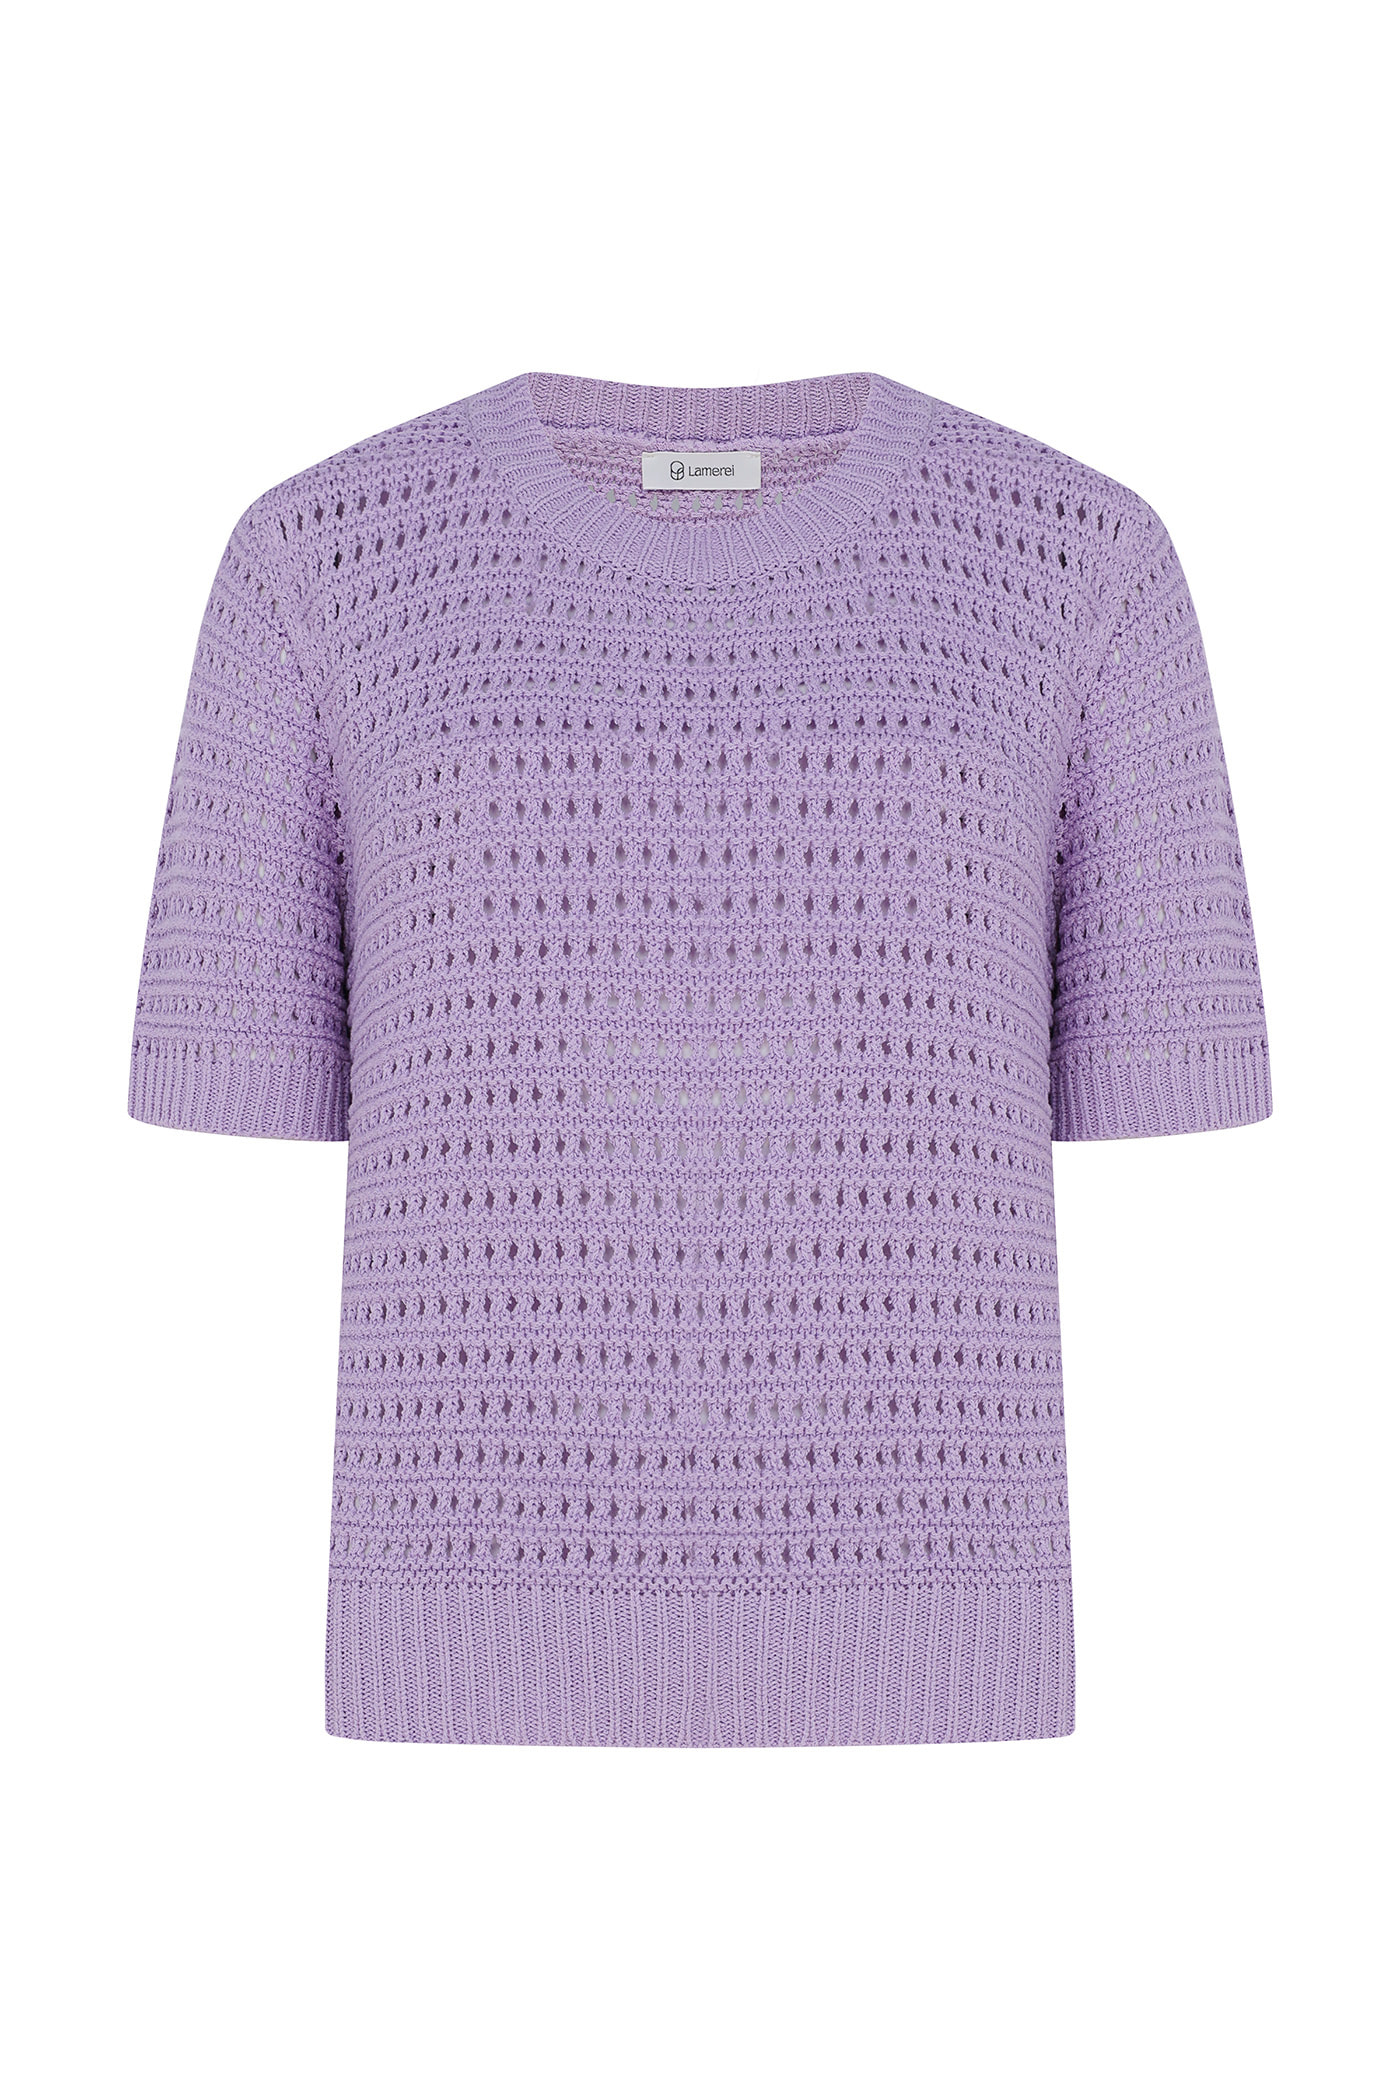 Crew Neck Crochet Knit Top-Purple